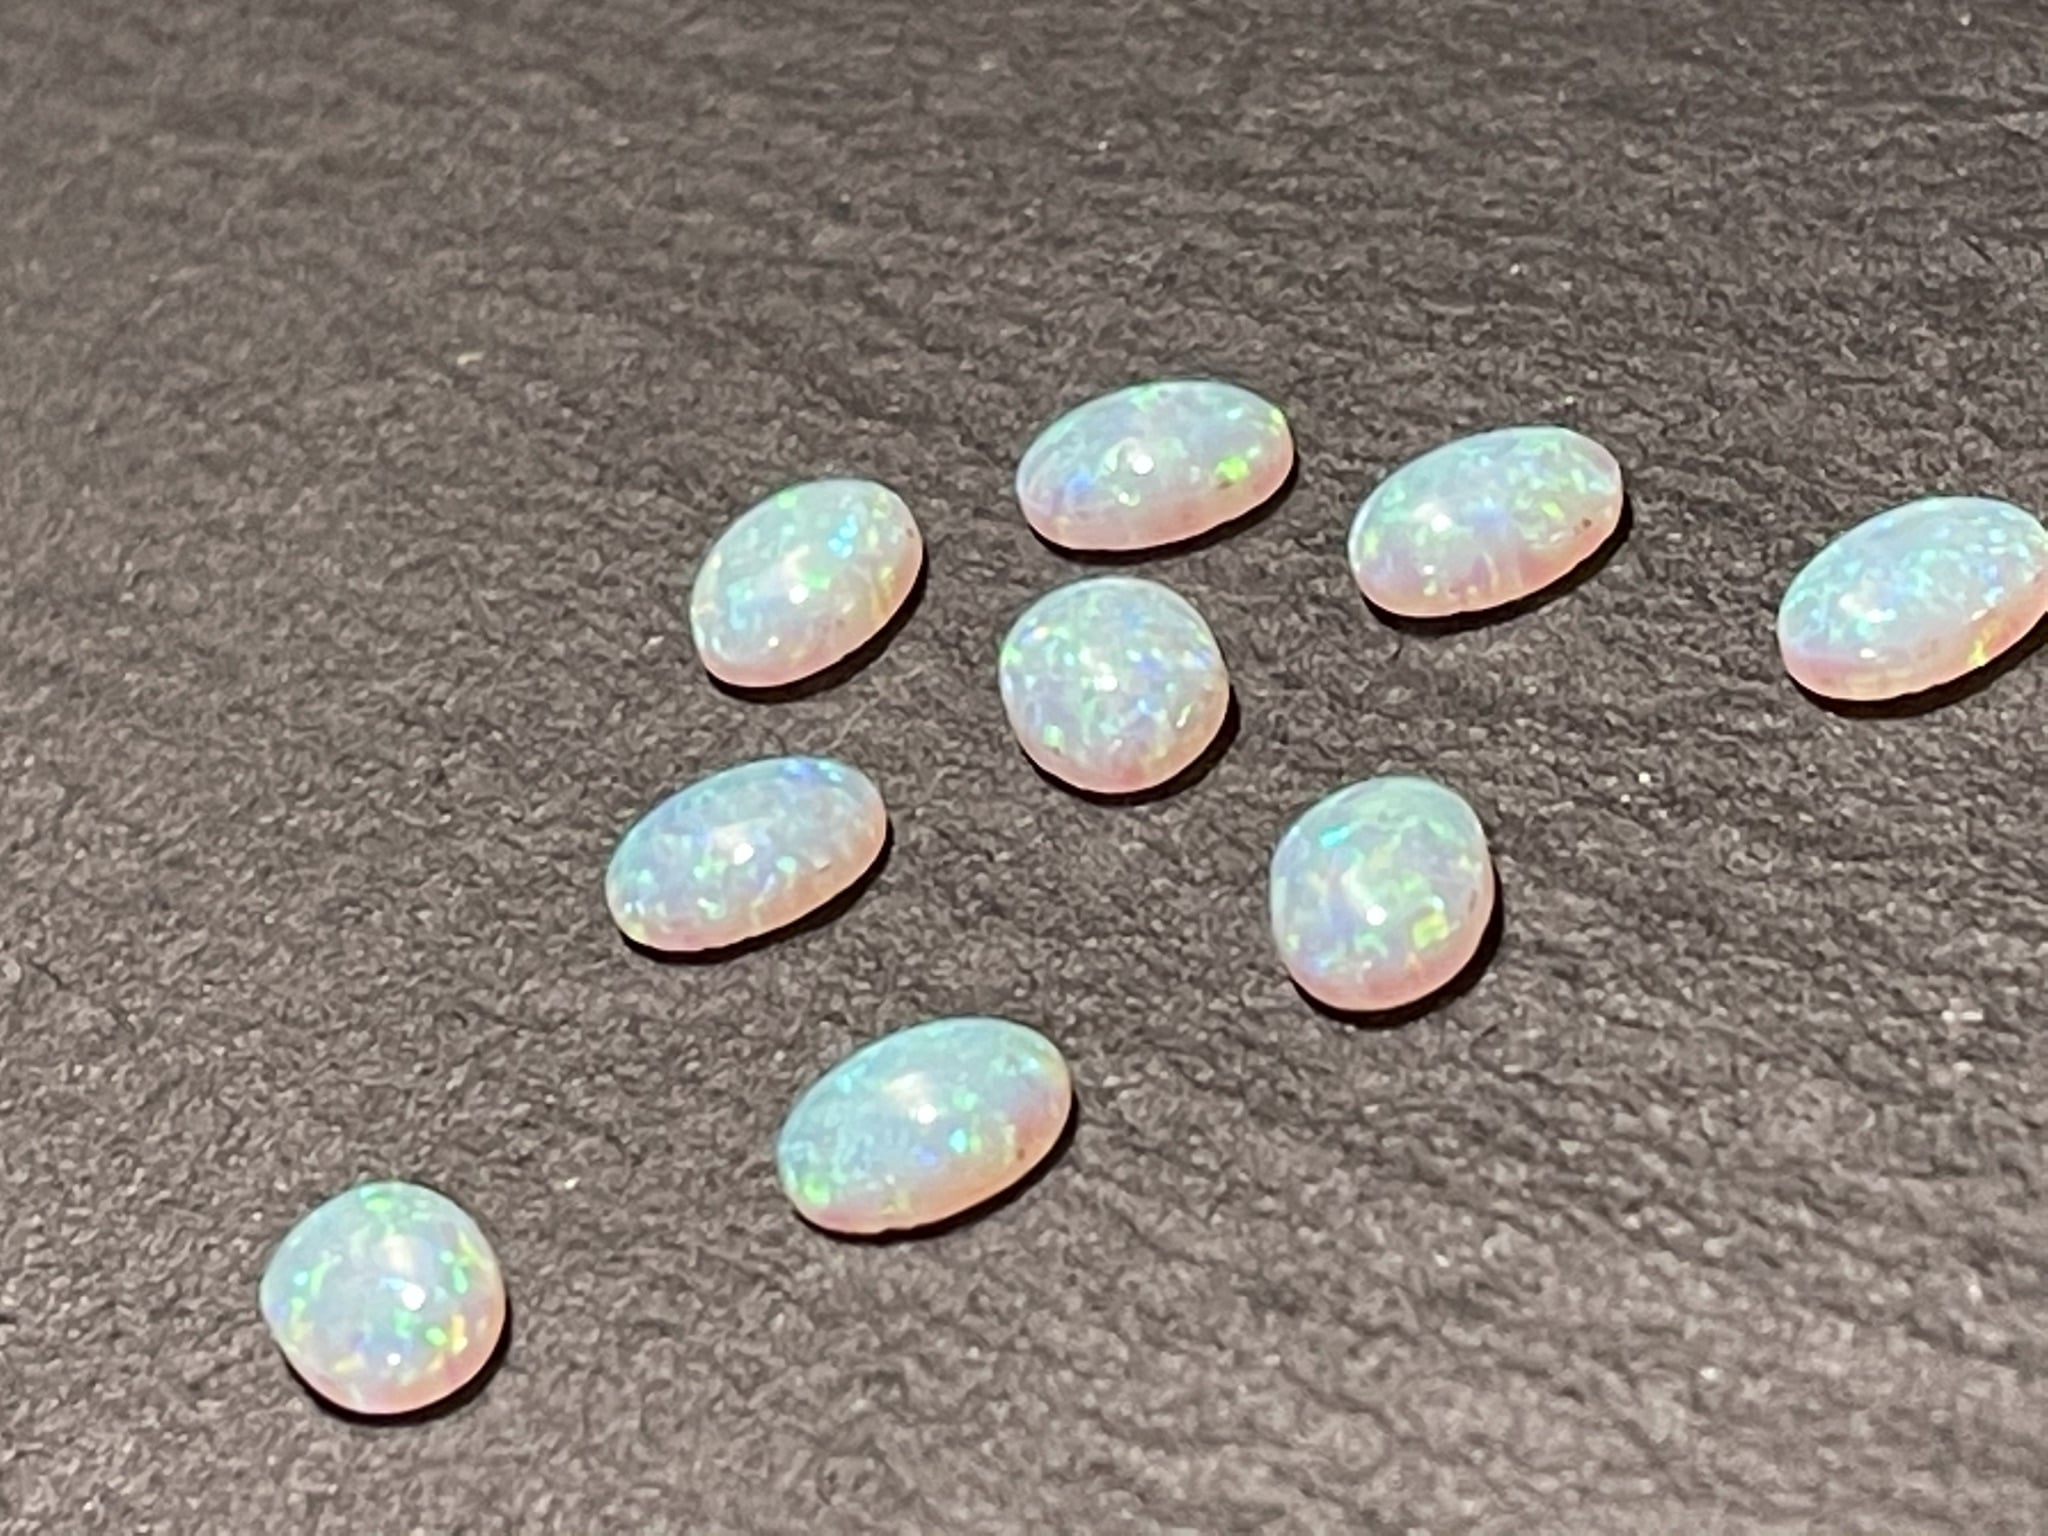 geluk Behoefte aan dienen Opaal betekenis - Herkomst en betekenis van de opaal | Juwelier Jos